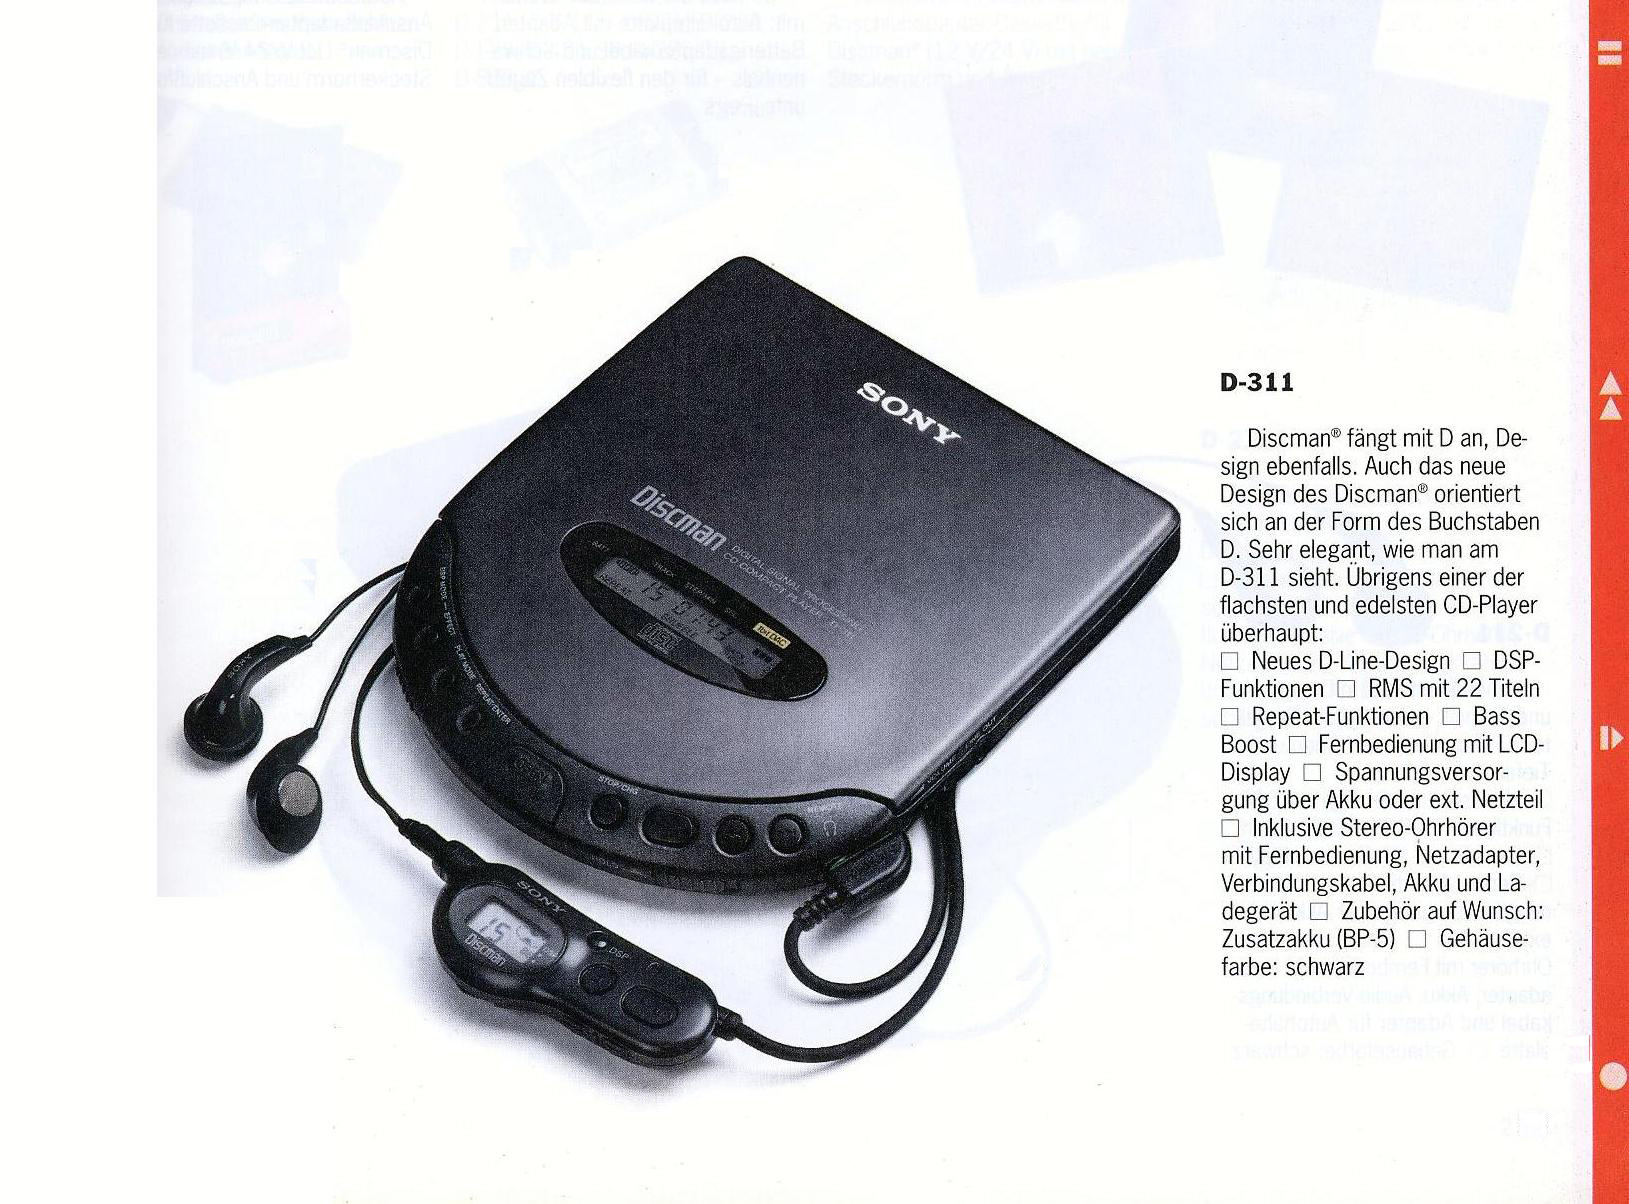 Sony D-311-Prospekt-1993.jpg